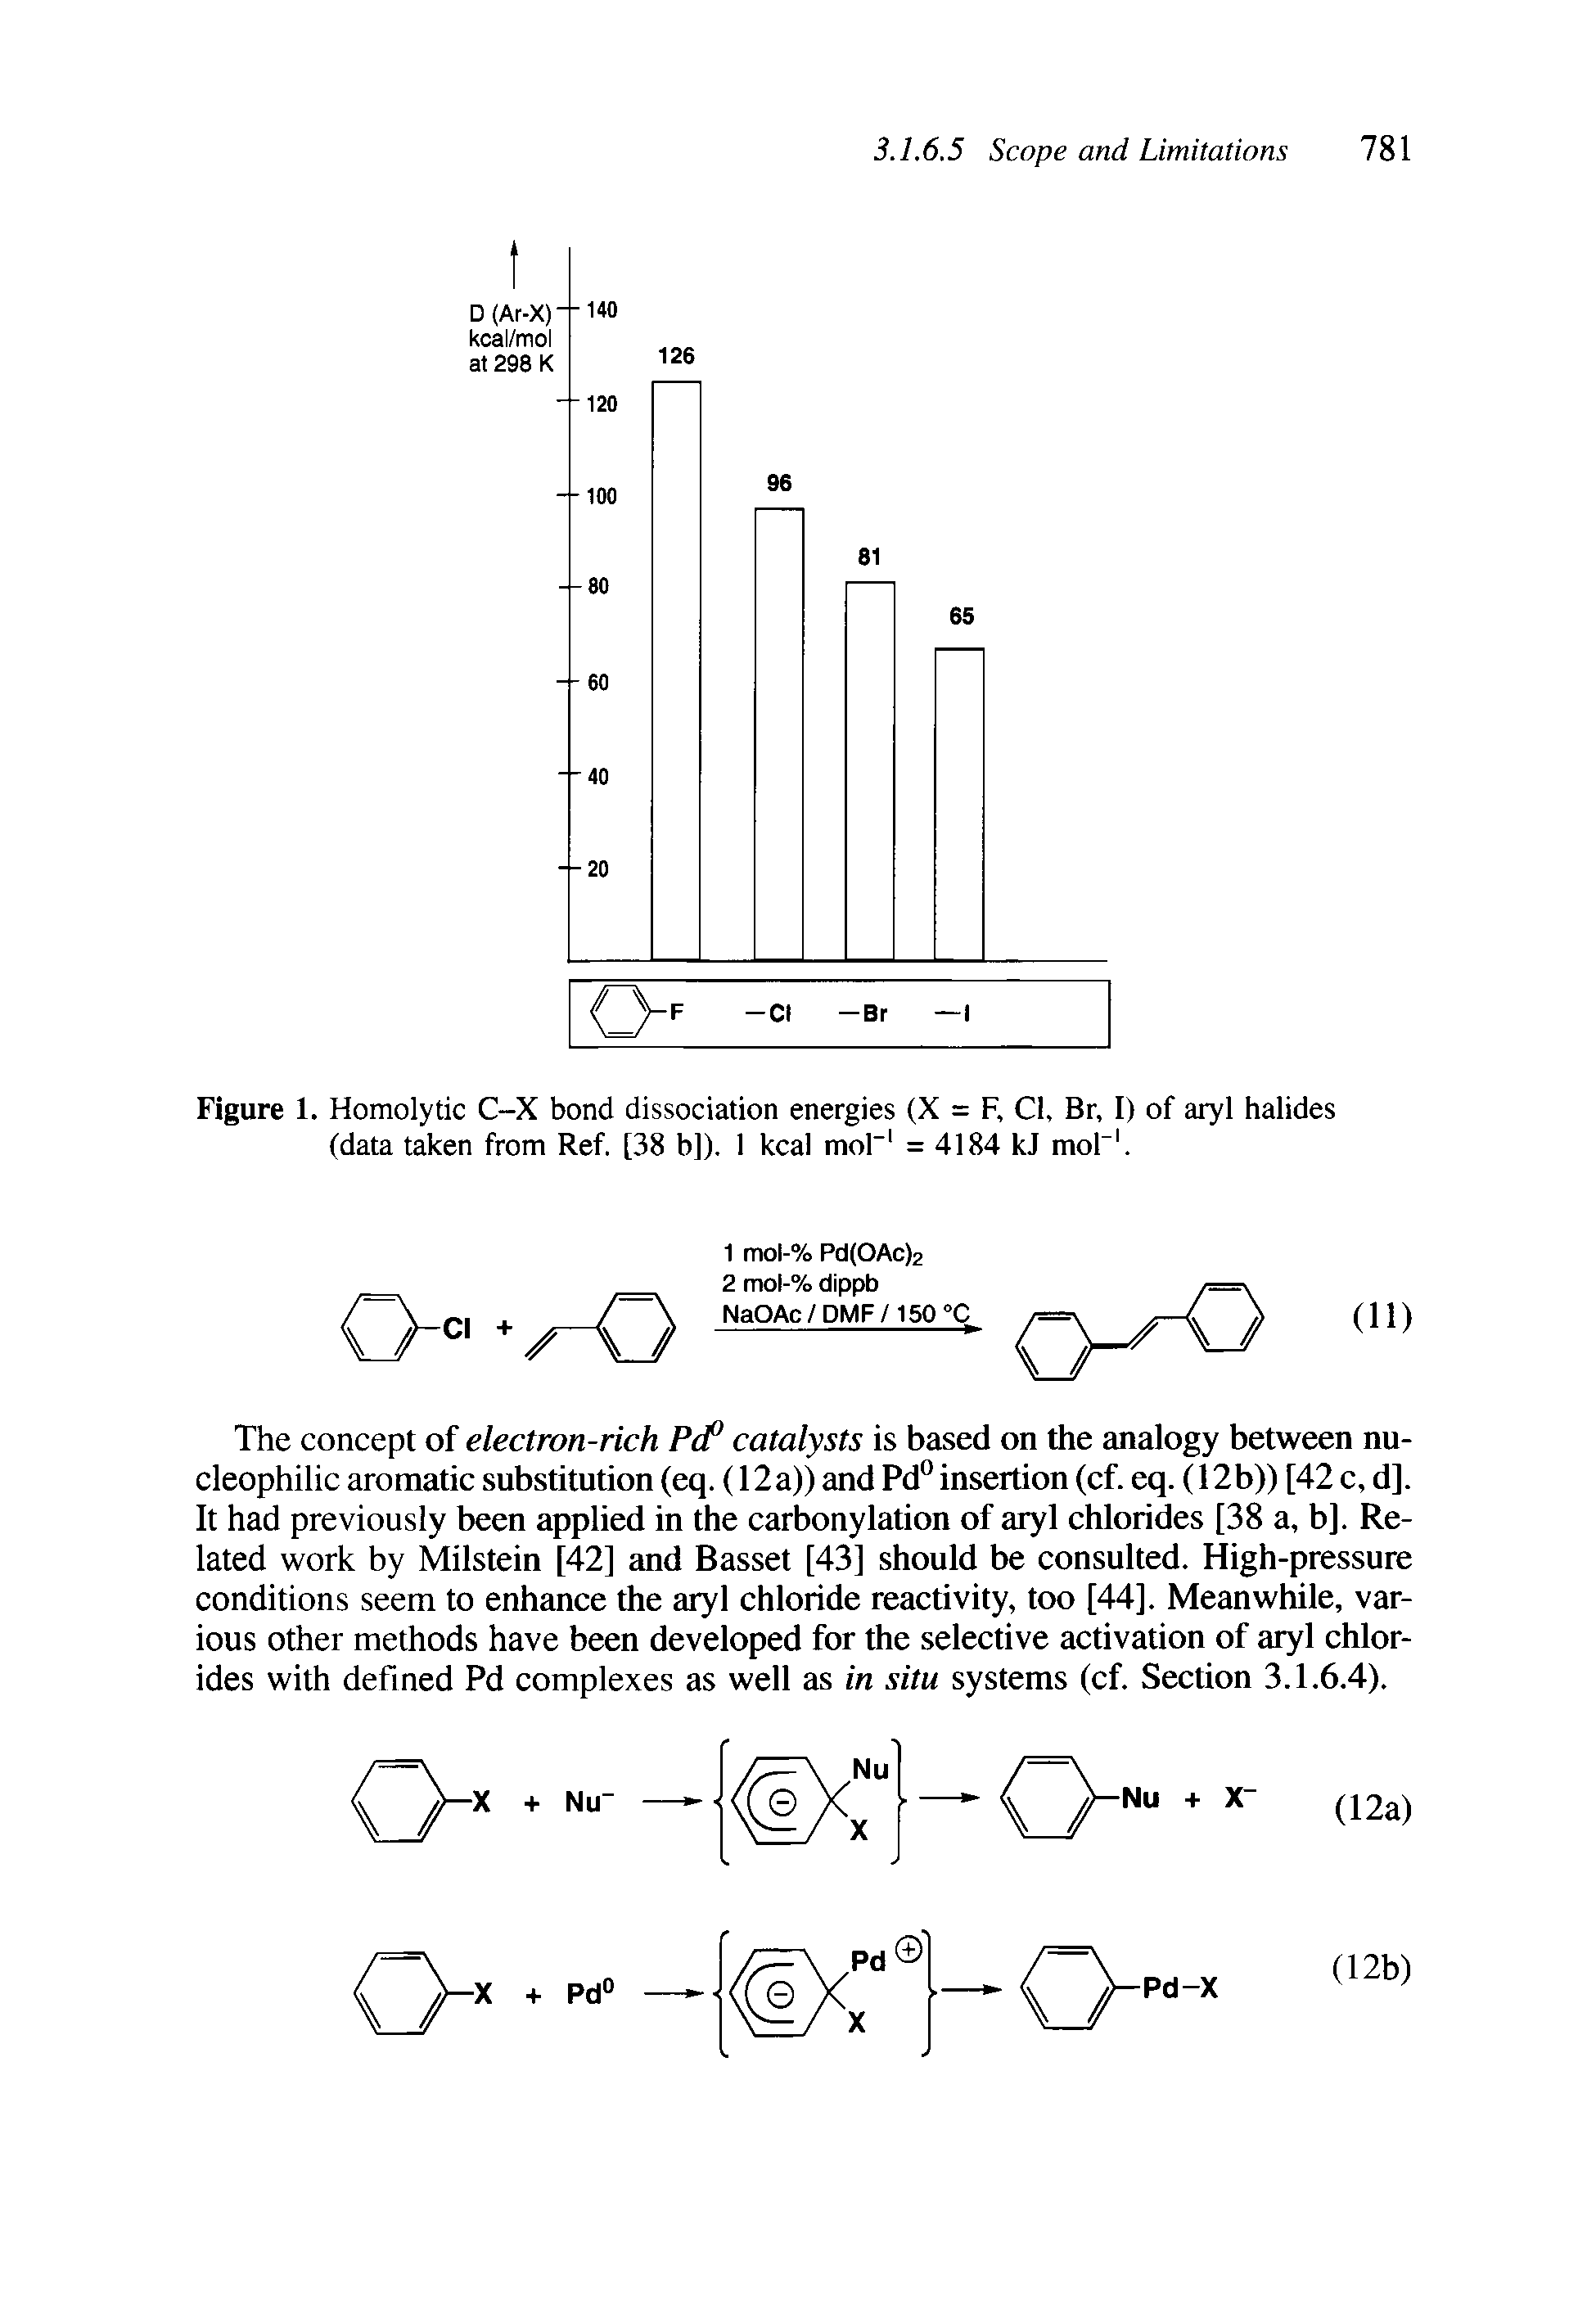 Figure 1. Homolytic C-X bond dissociation energies (X = F, Cl, Br, I) of aryl halides (data taken from Ref. [38 b]). 1 kcal mol = 4184 kJ mol . ...